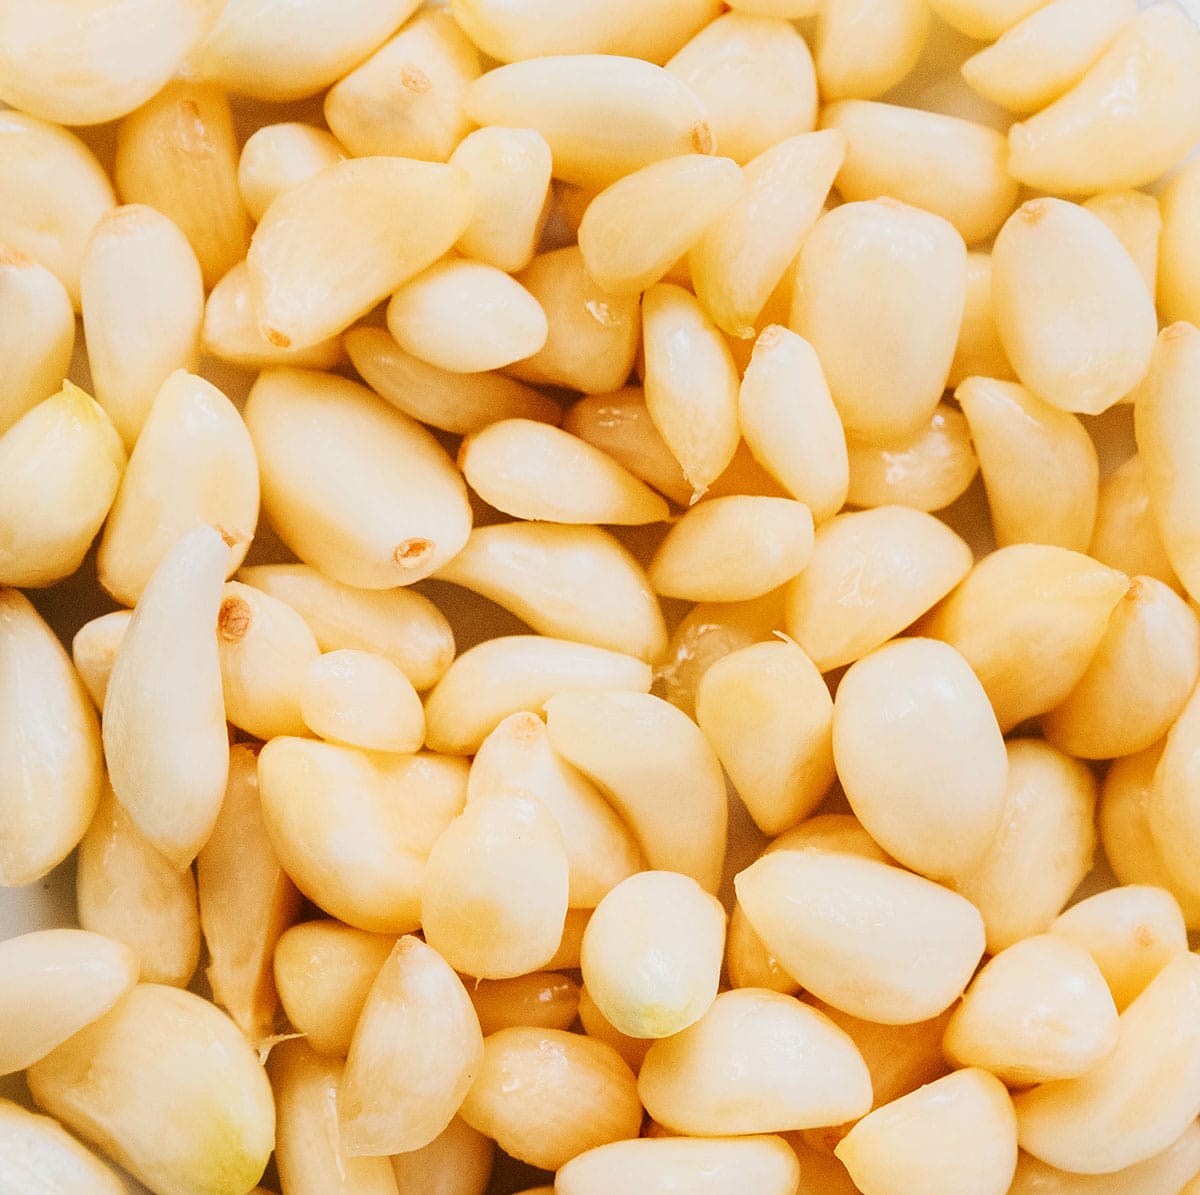 A large pile of peeled garlic cloves